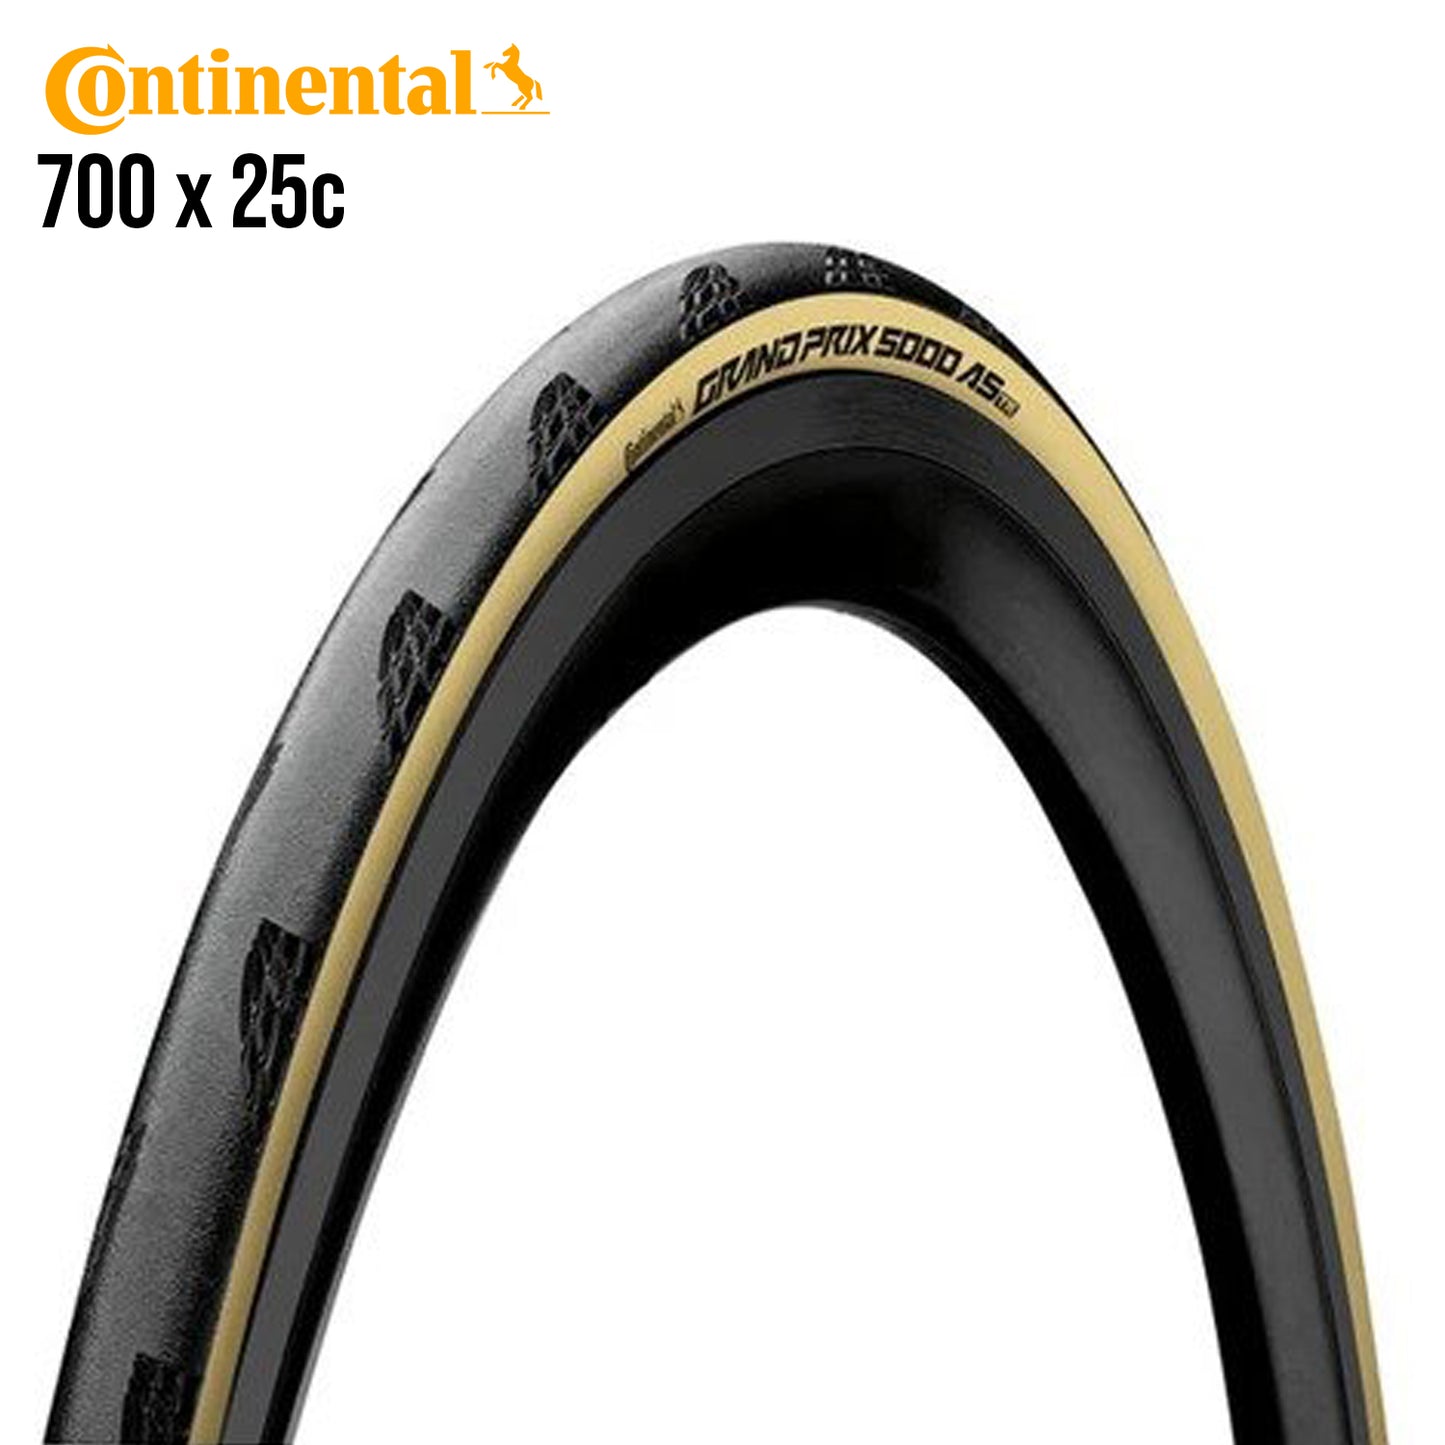 Continental Grand Prix 5000 (GP5000) AS TR All-Season Road Bike Tire Tubeless Ready - Cream Wall